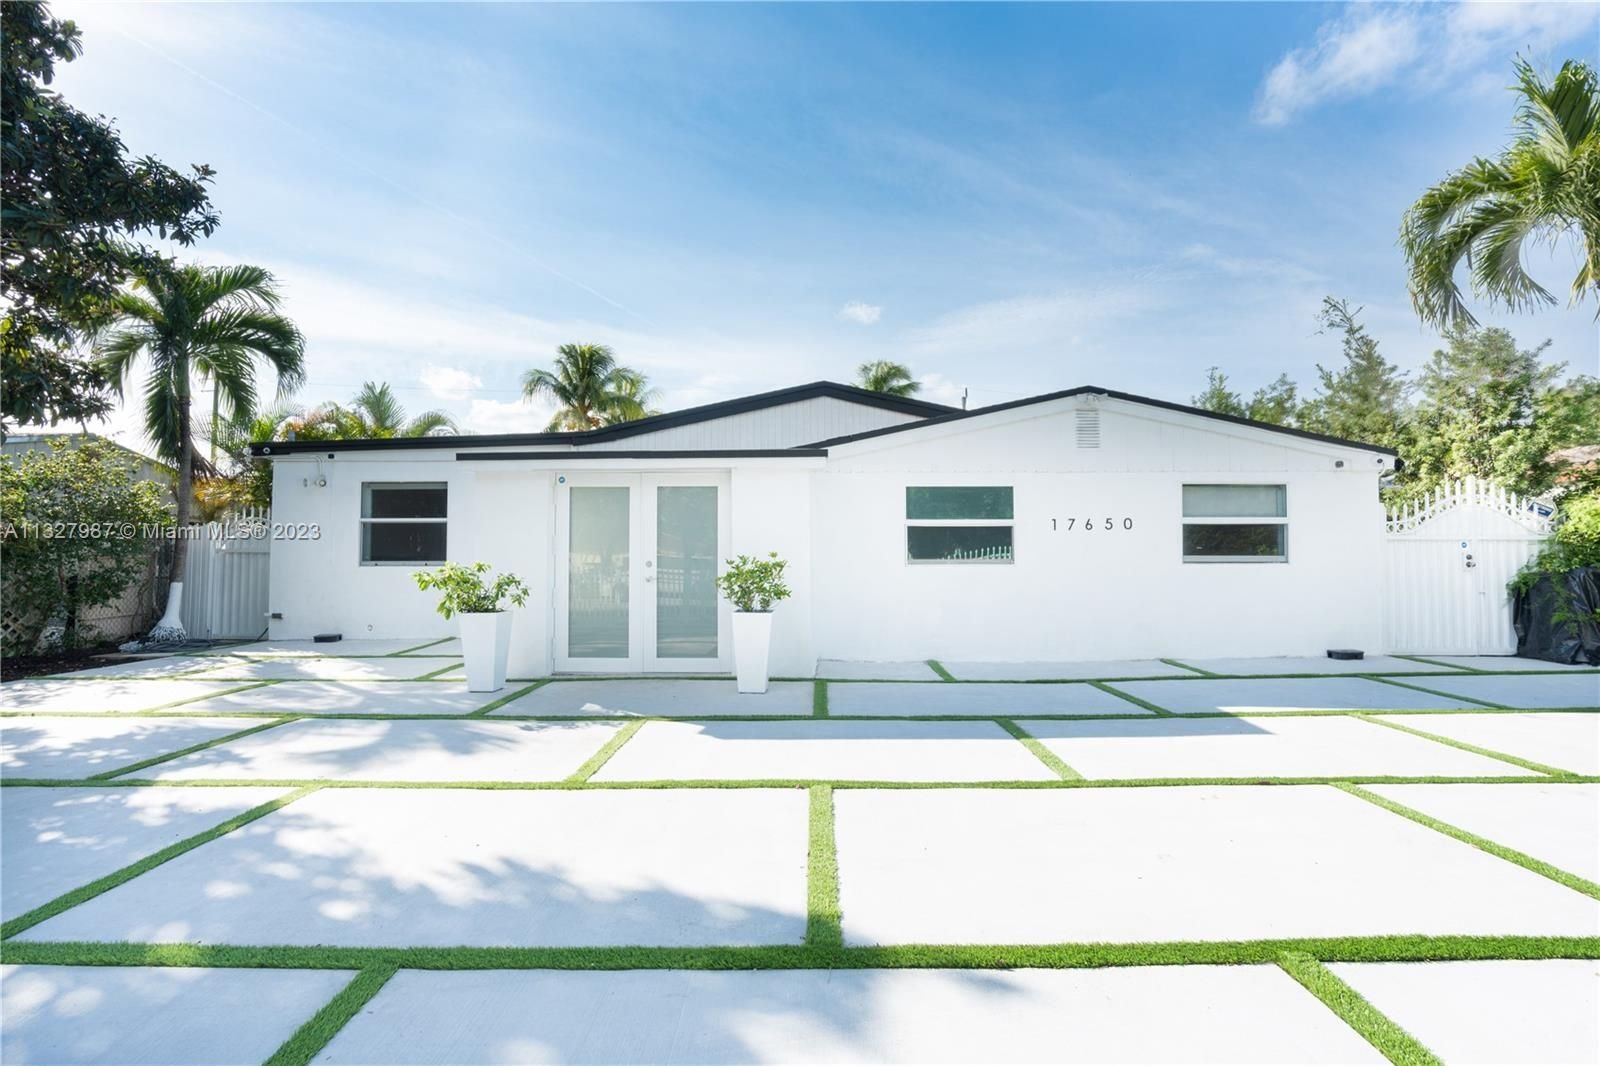 Real estate property located at 17650 19th Ave, Miami-Dade County, North Miami Beach, FL